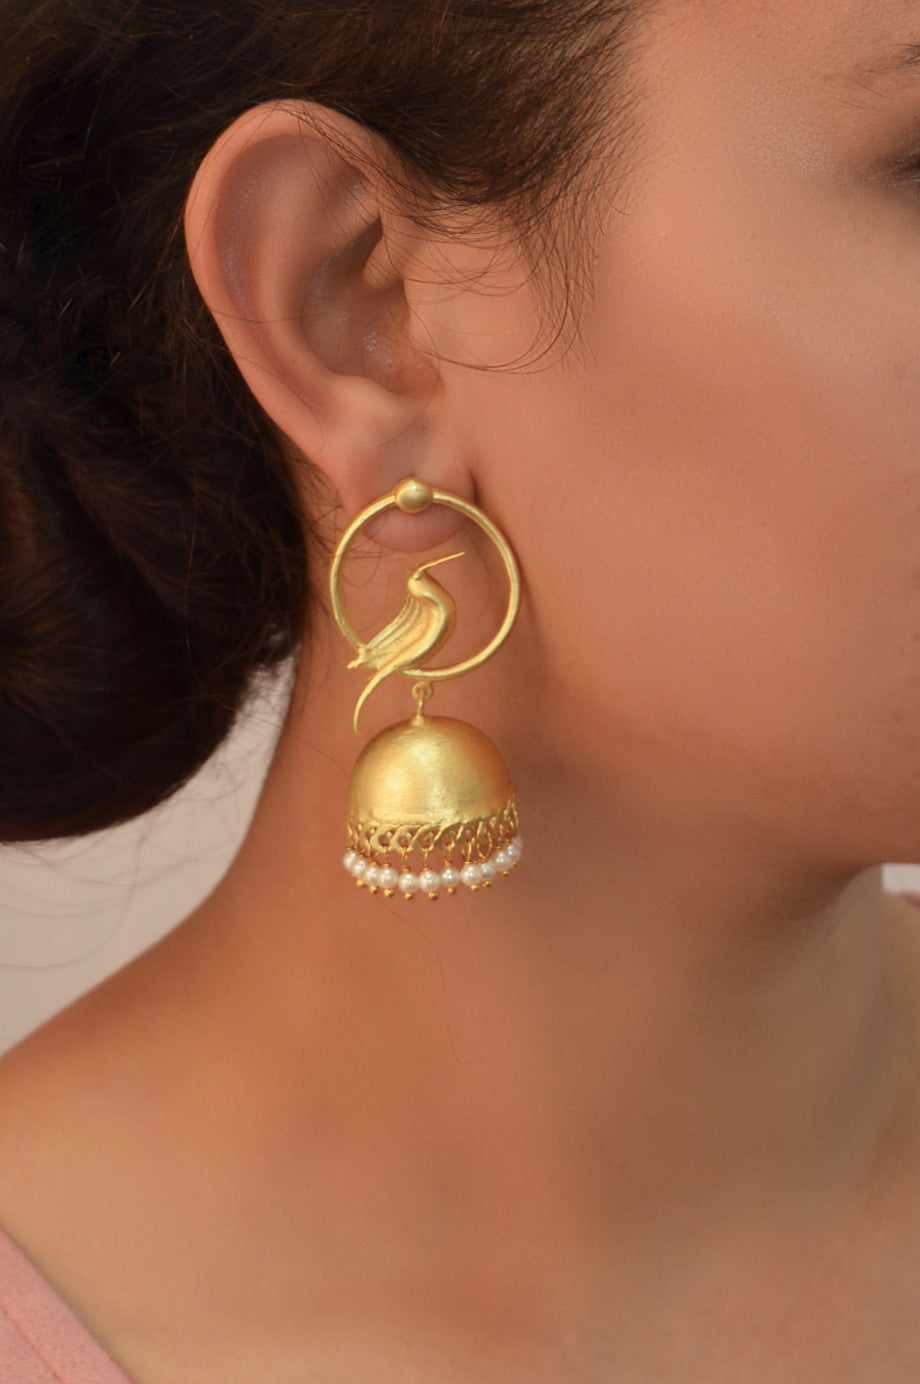 Buy Shipaara Artificial Earrings Stud Earrings With Plastic Multi-Design  For Girls (40 Pair) at Amazon.in